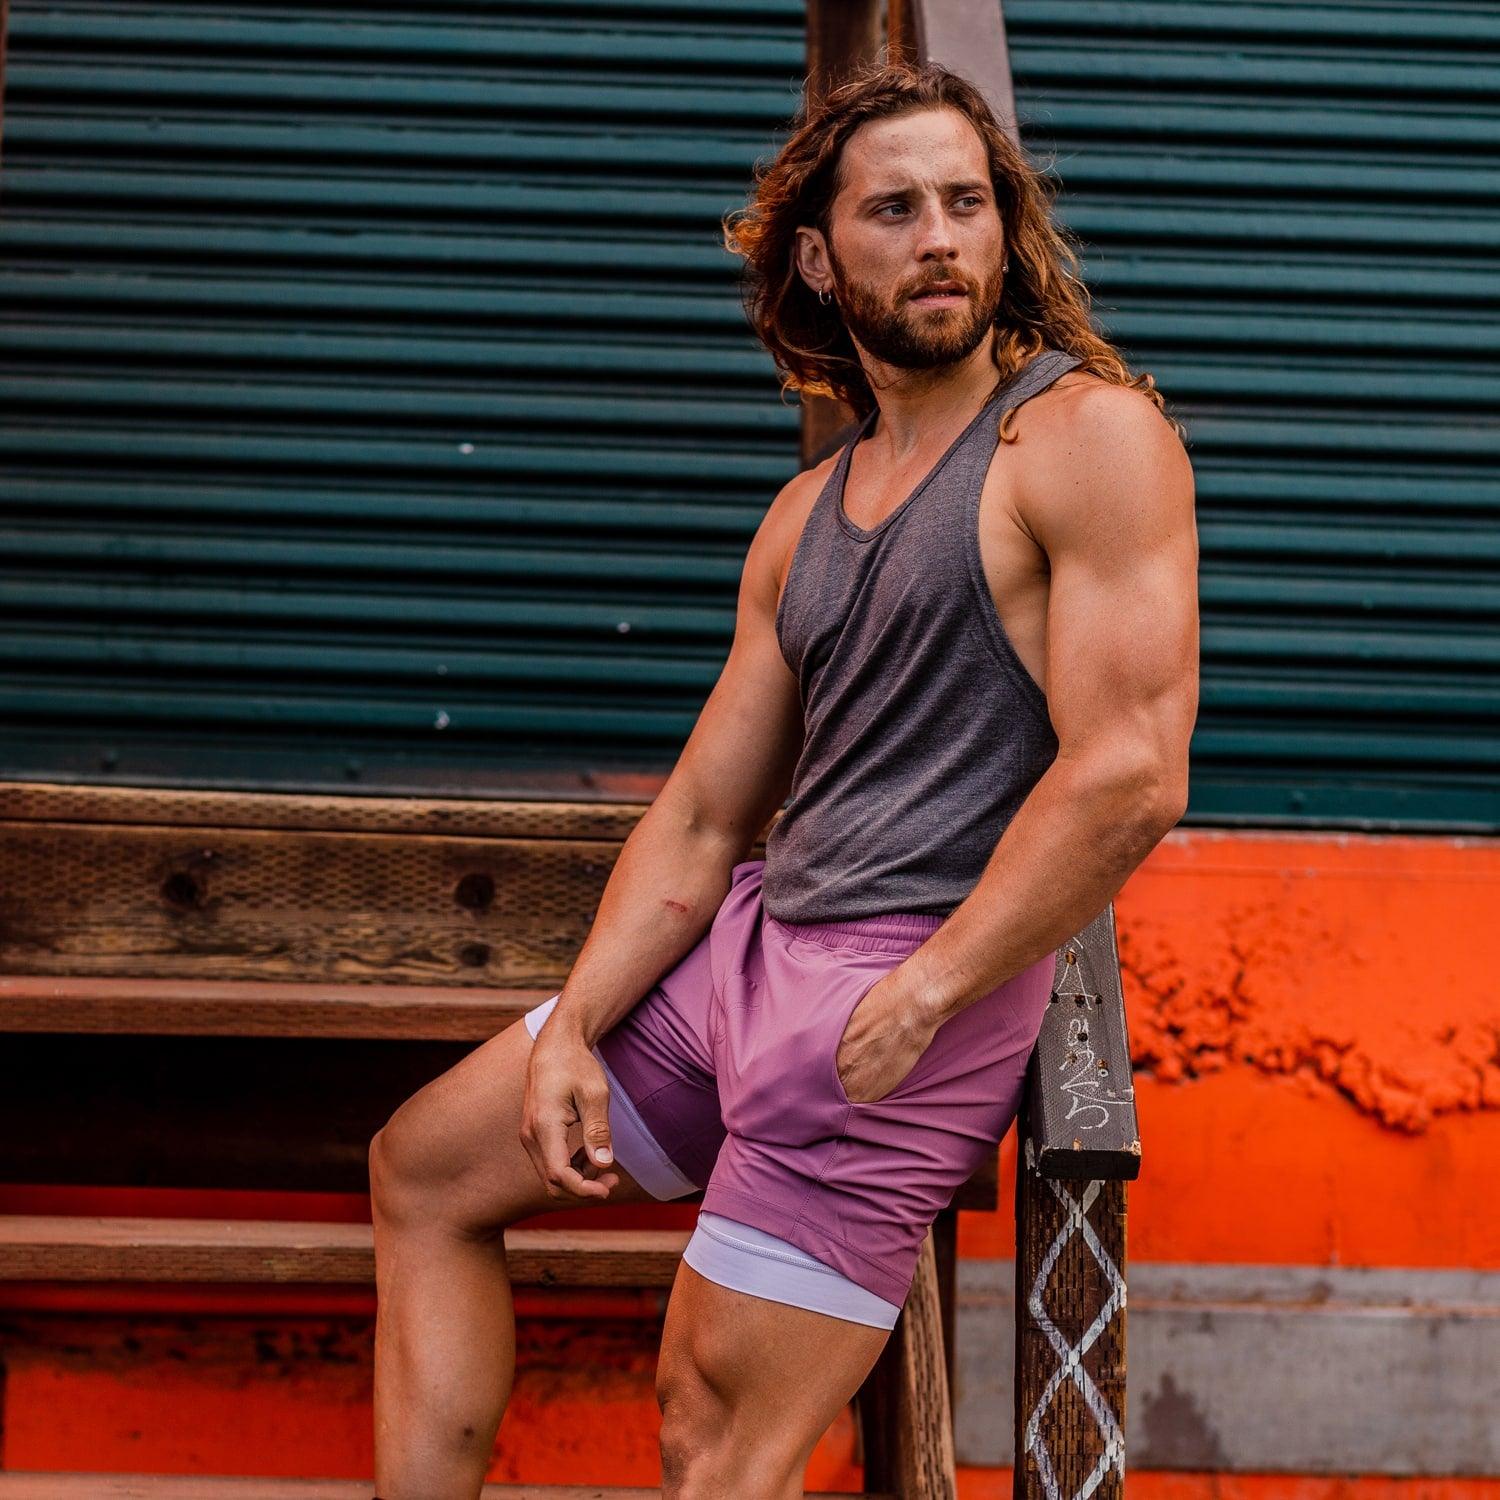 Men's Hot Yoga Short with 4.25 Inseam – The Yoga Line